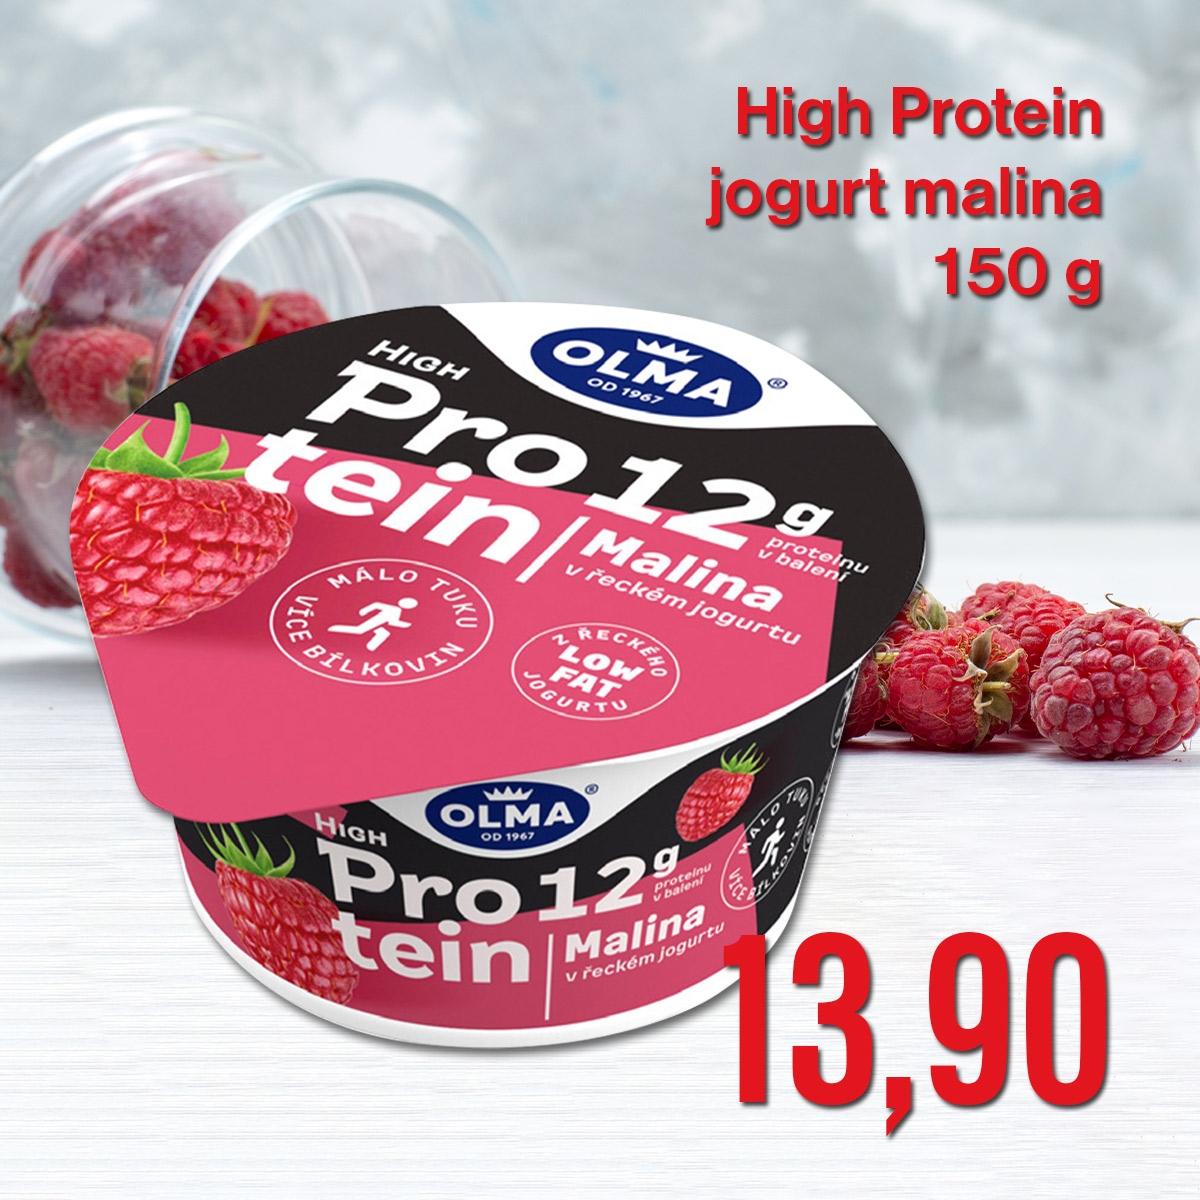 High Protein jogurt malina 150 g